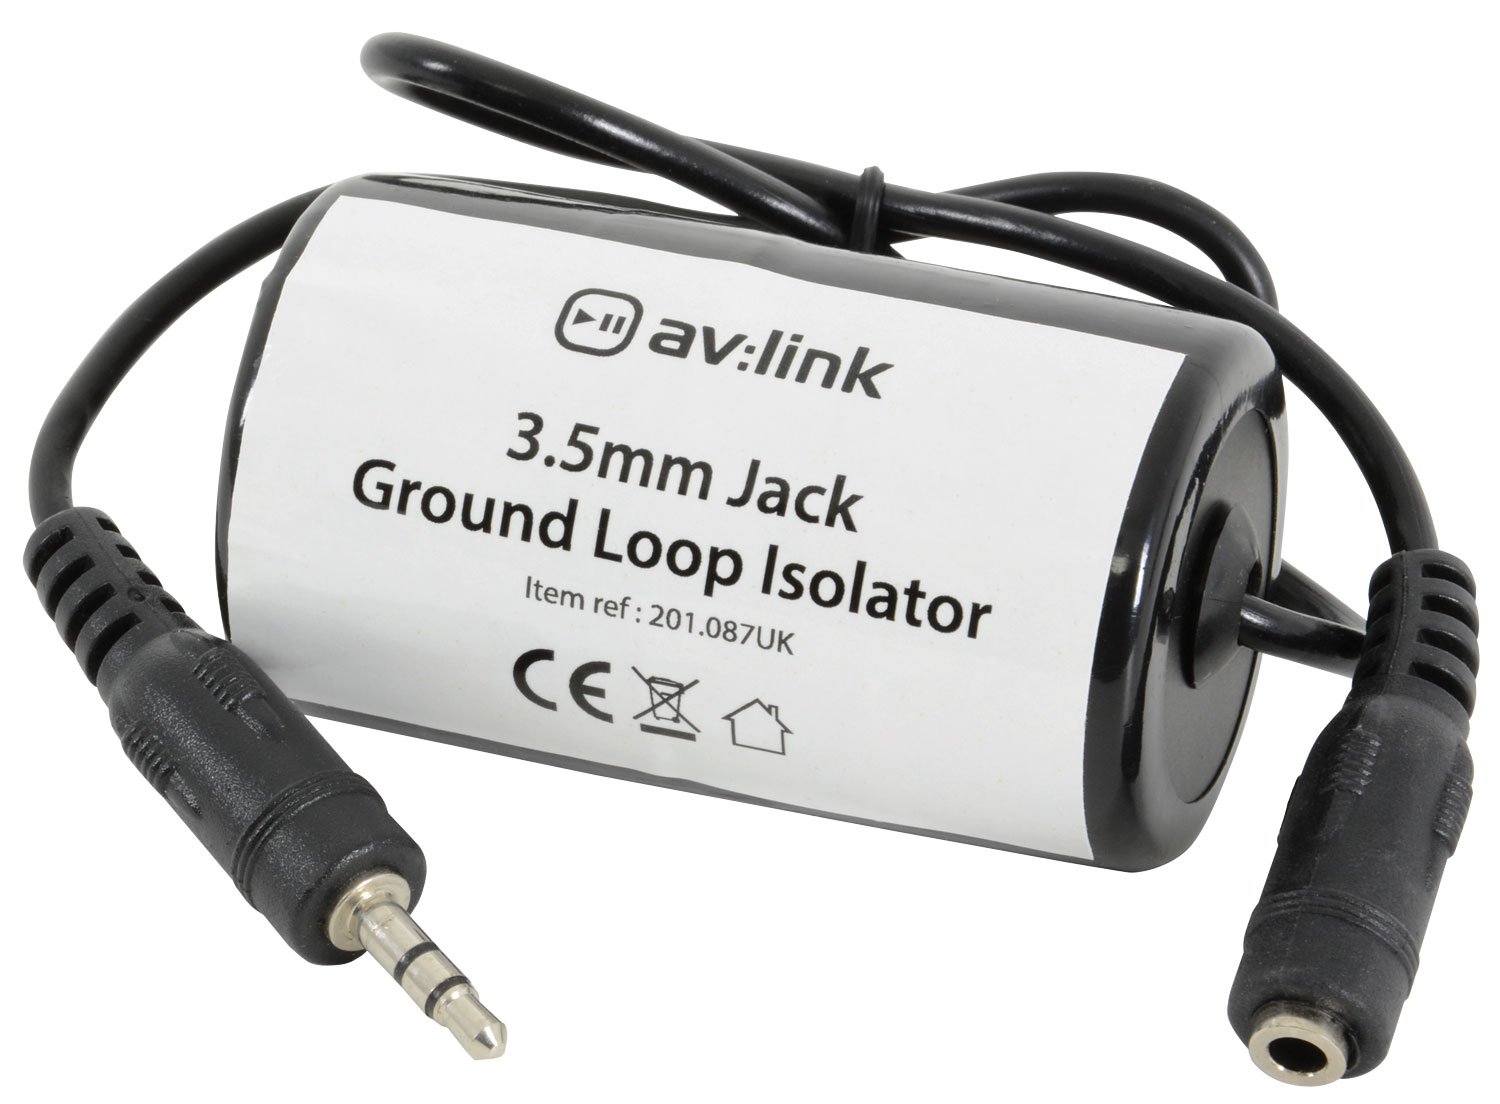 Ground Loop Isolator 3.5mm Jack - 3.5mm Socket High quality ground loop isolator